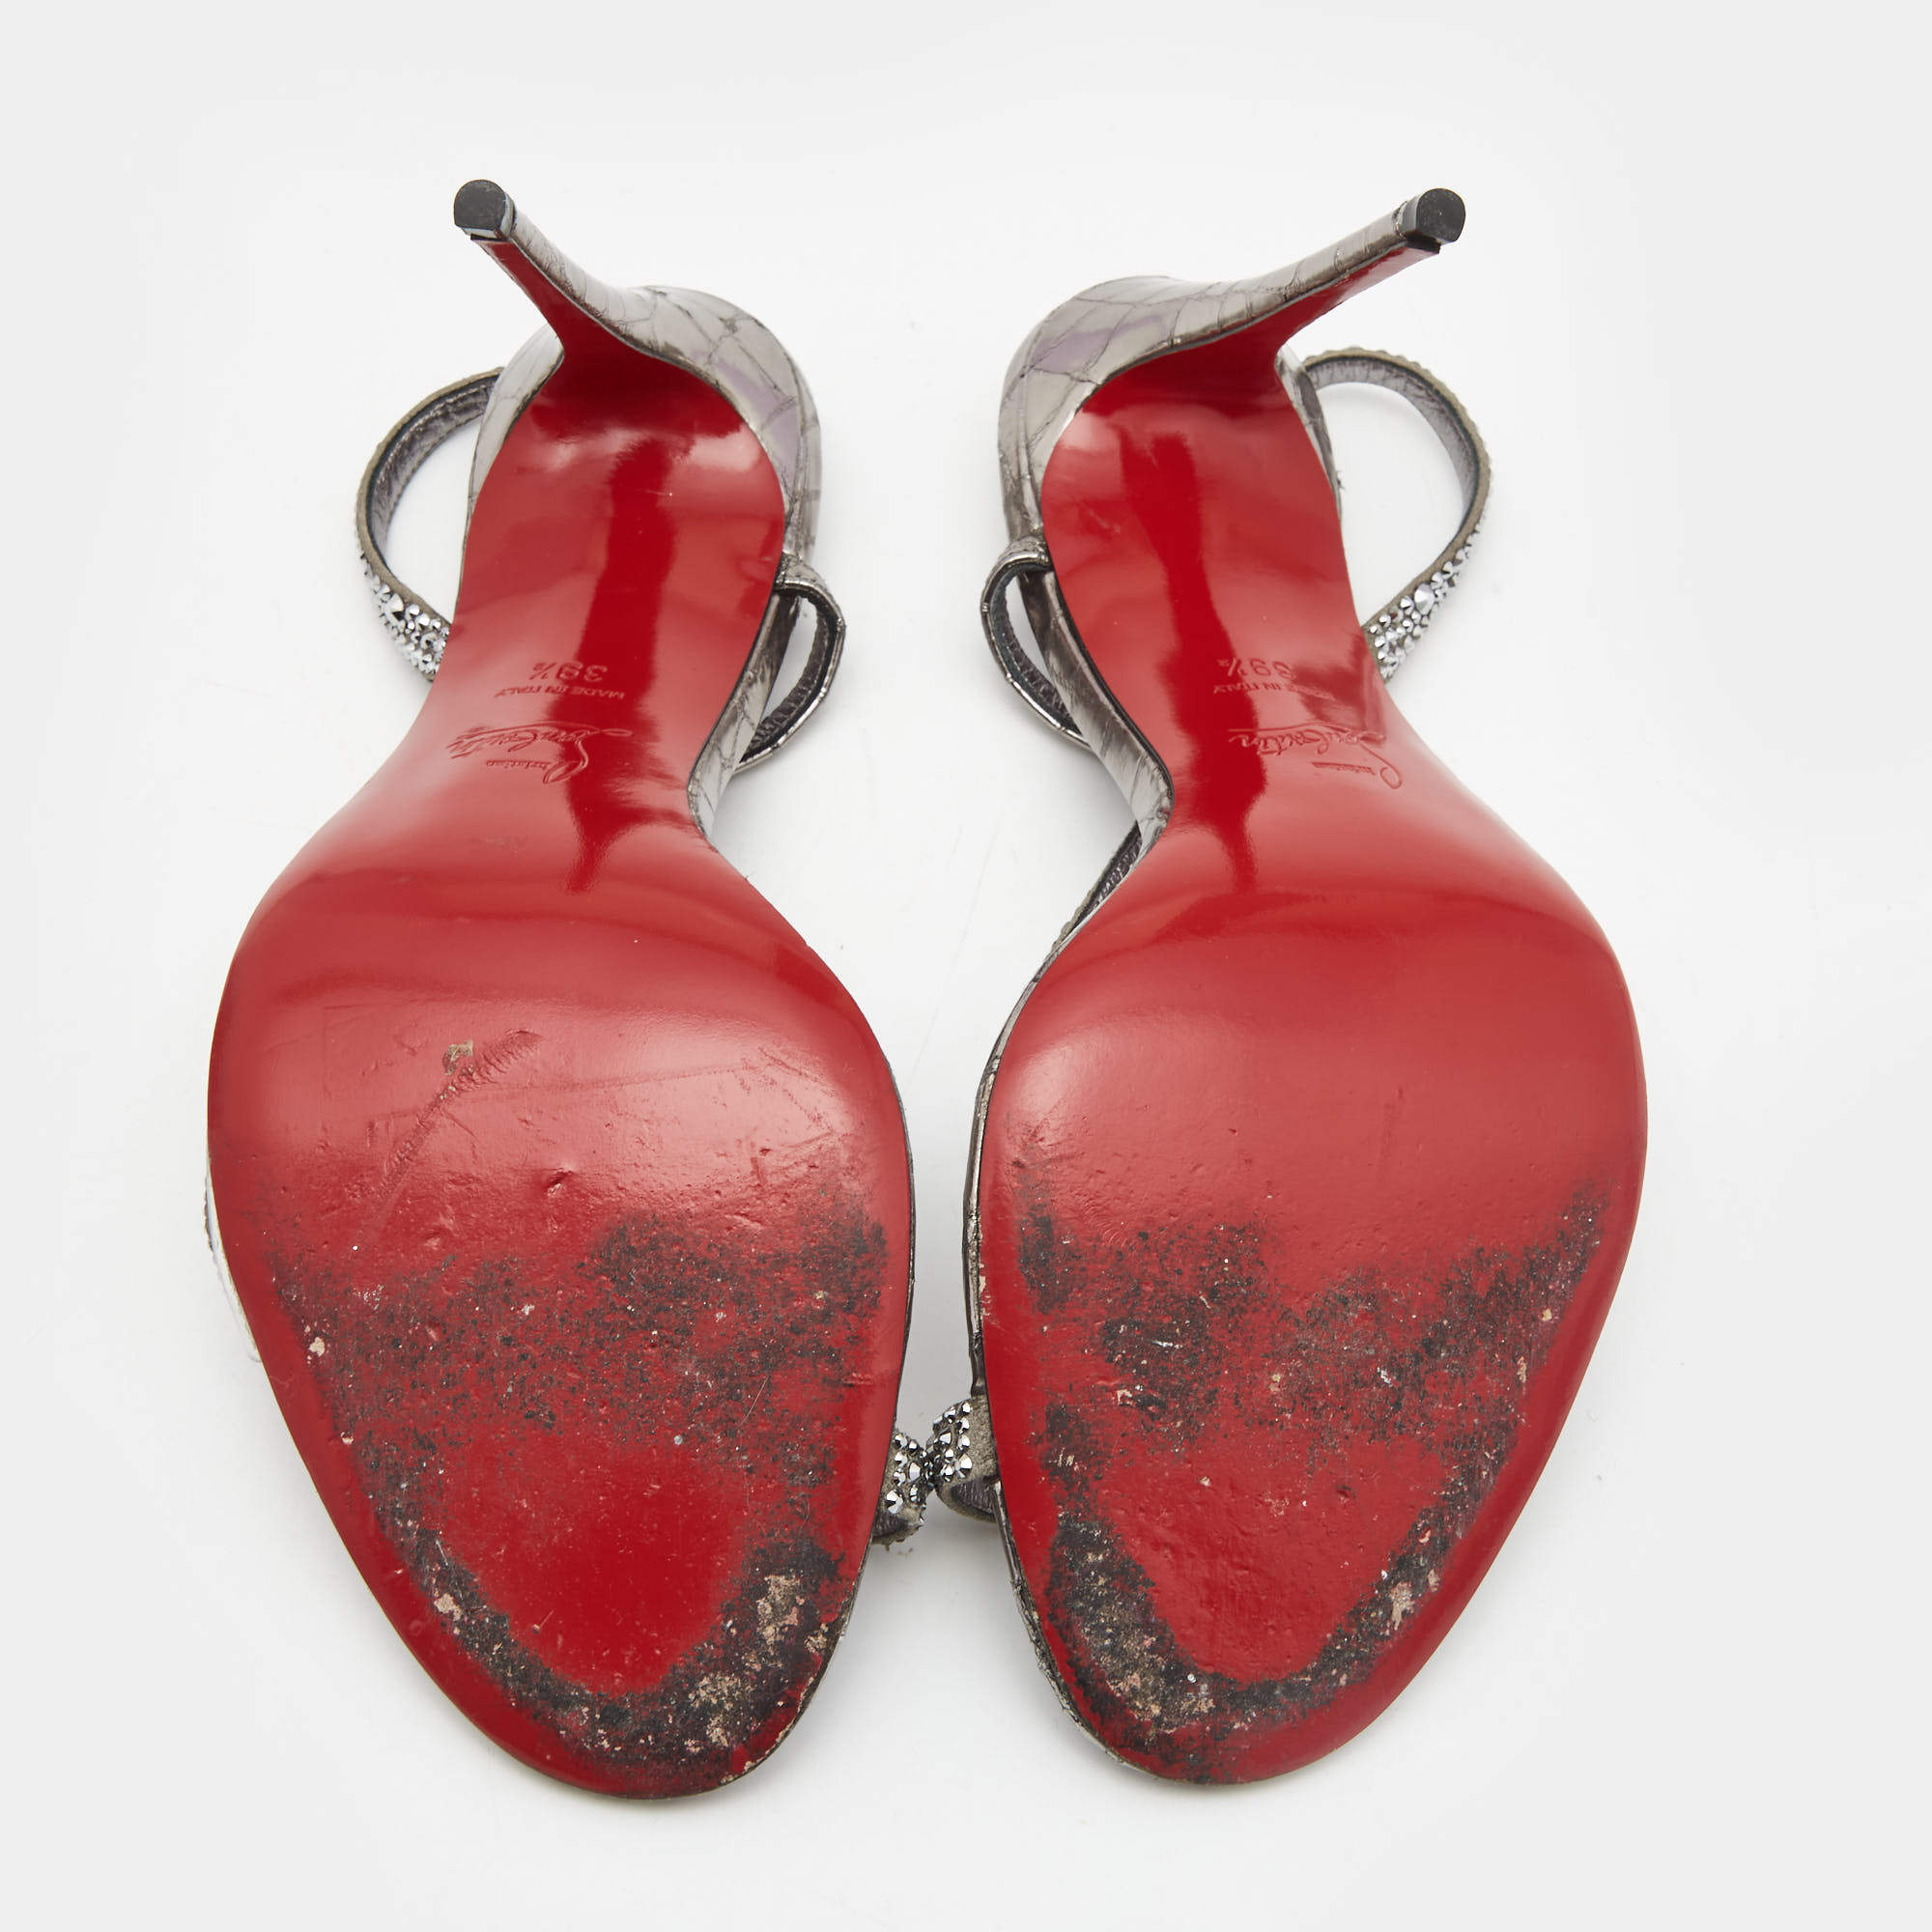 Christian Louboutin Rosalie Crystal-embellished Sandals 100 - Silver - 39